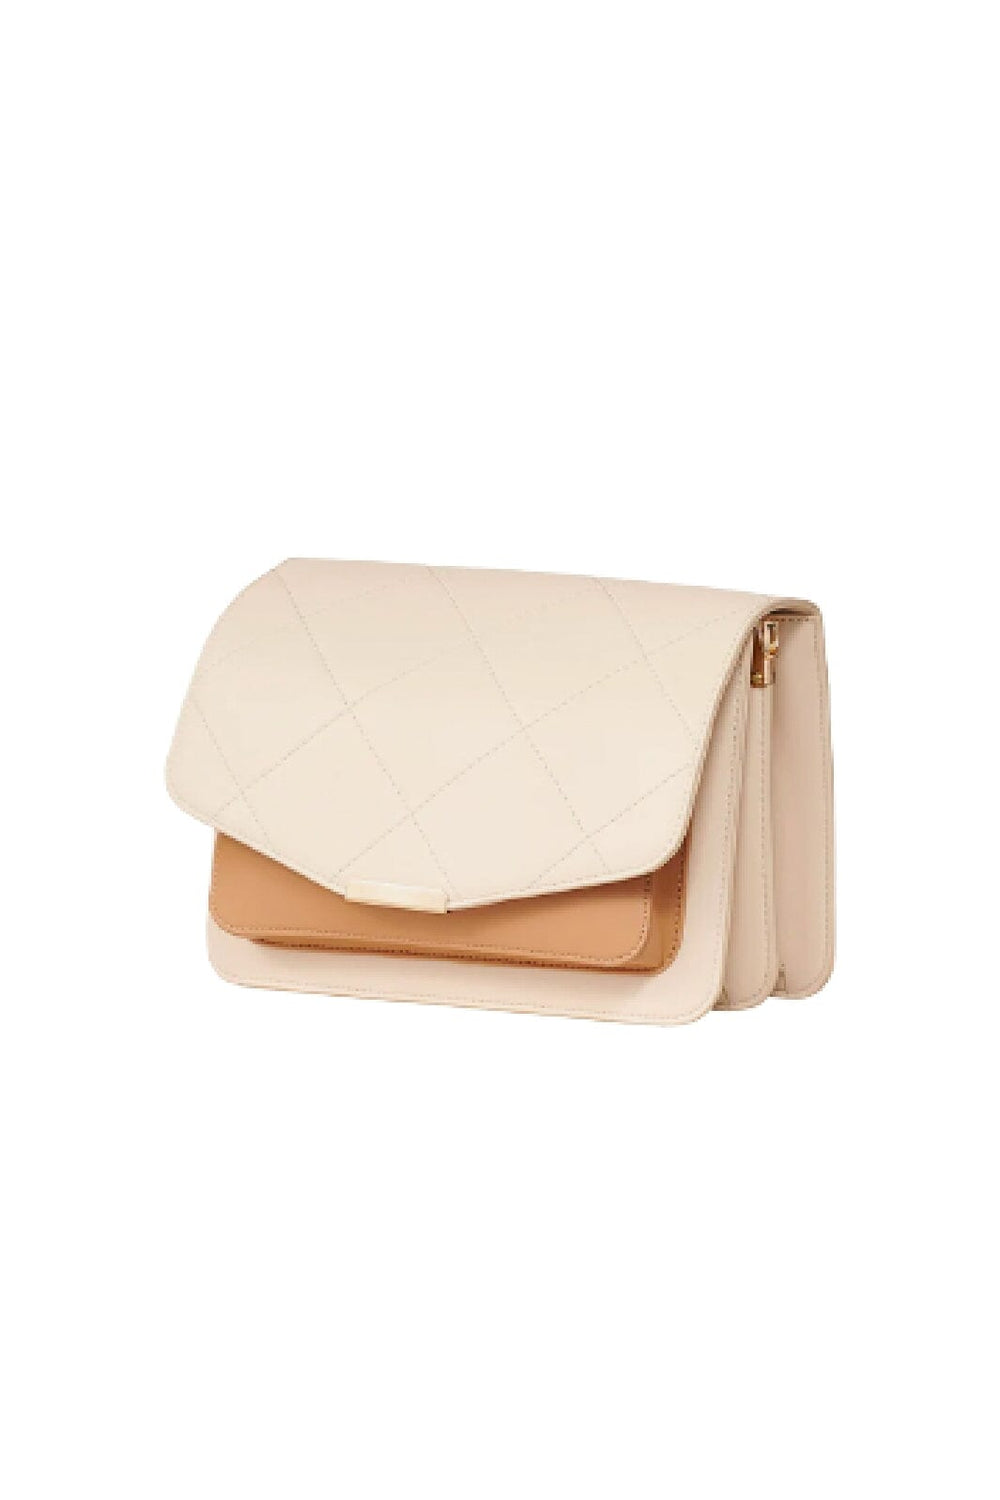 Noella - Blanca Bag Medium - 607 Nude Leather Look Tasker 